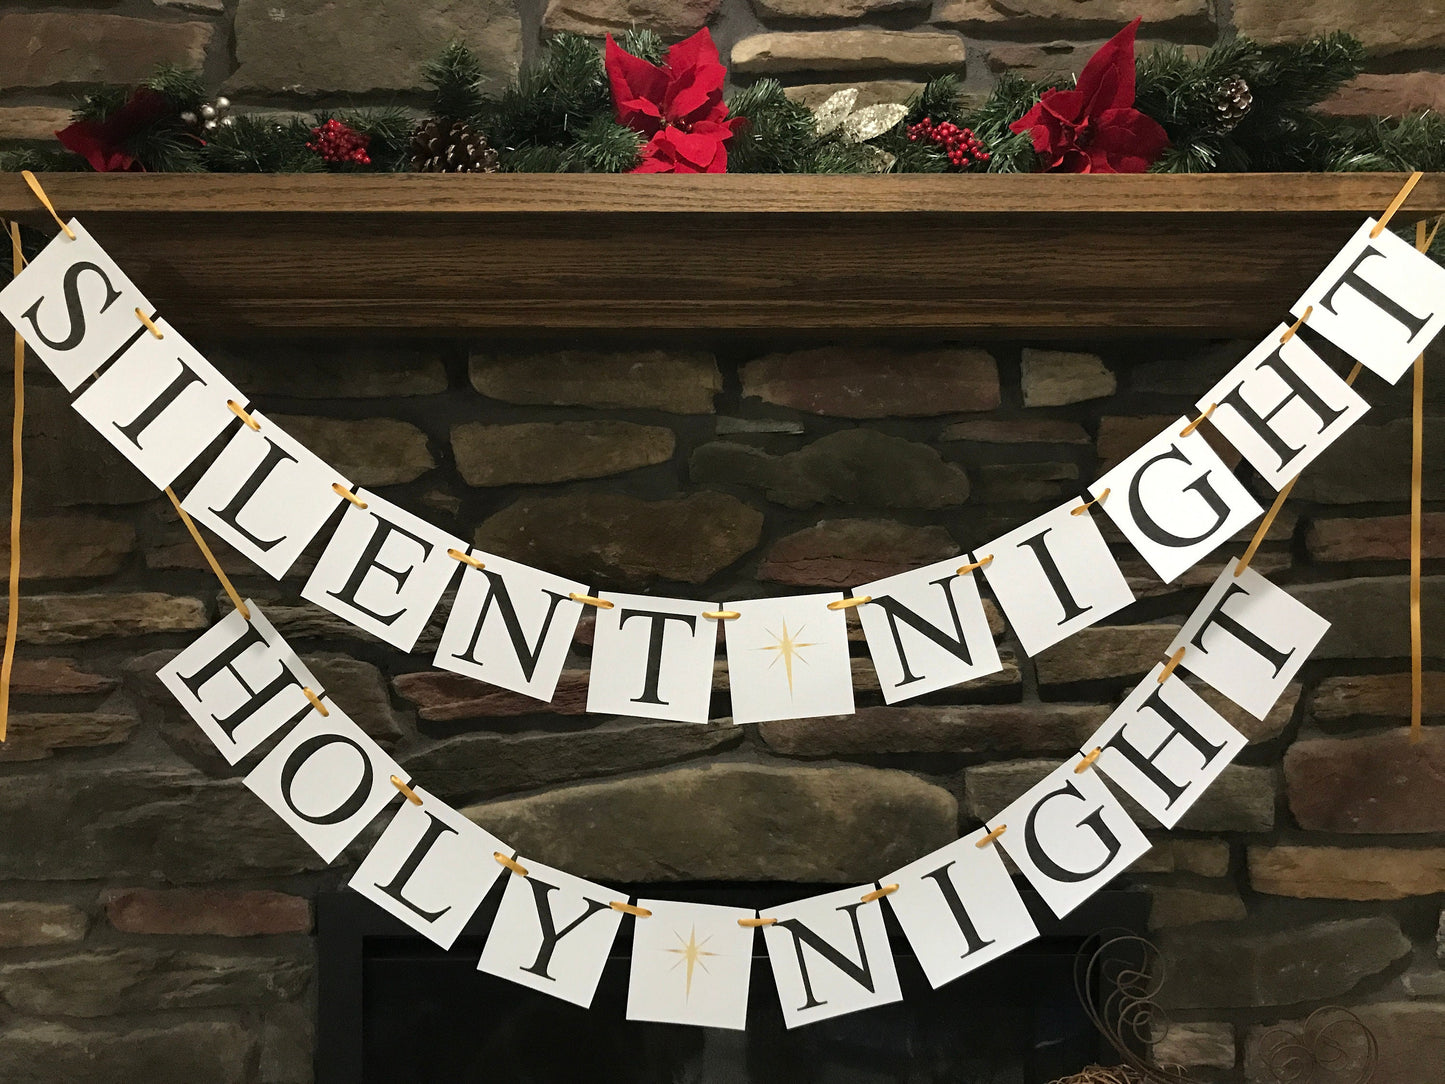 Silent night holy night Banner, North Star Christmas decorations, living room holiday fireplace mantel bunting, Christmas carol garland